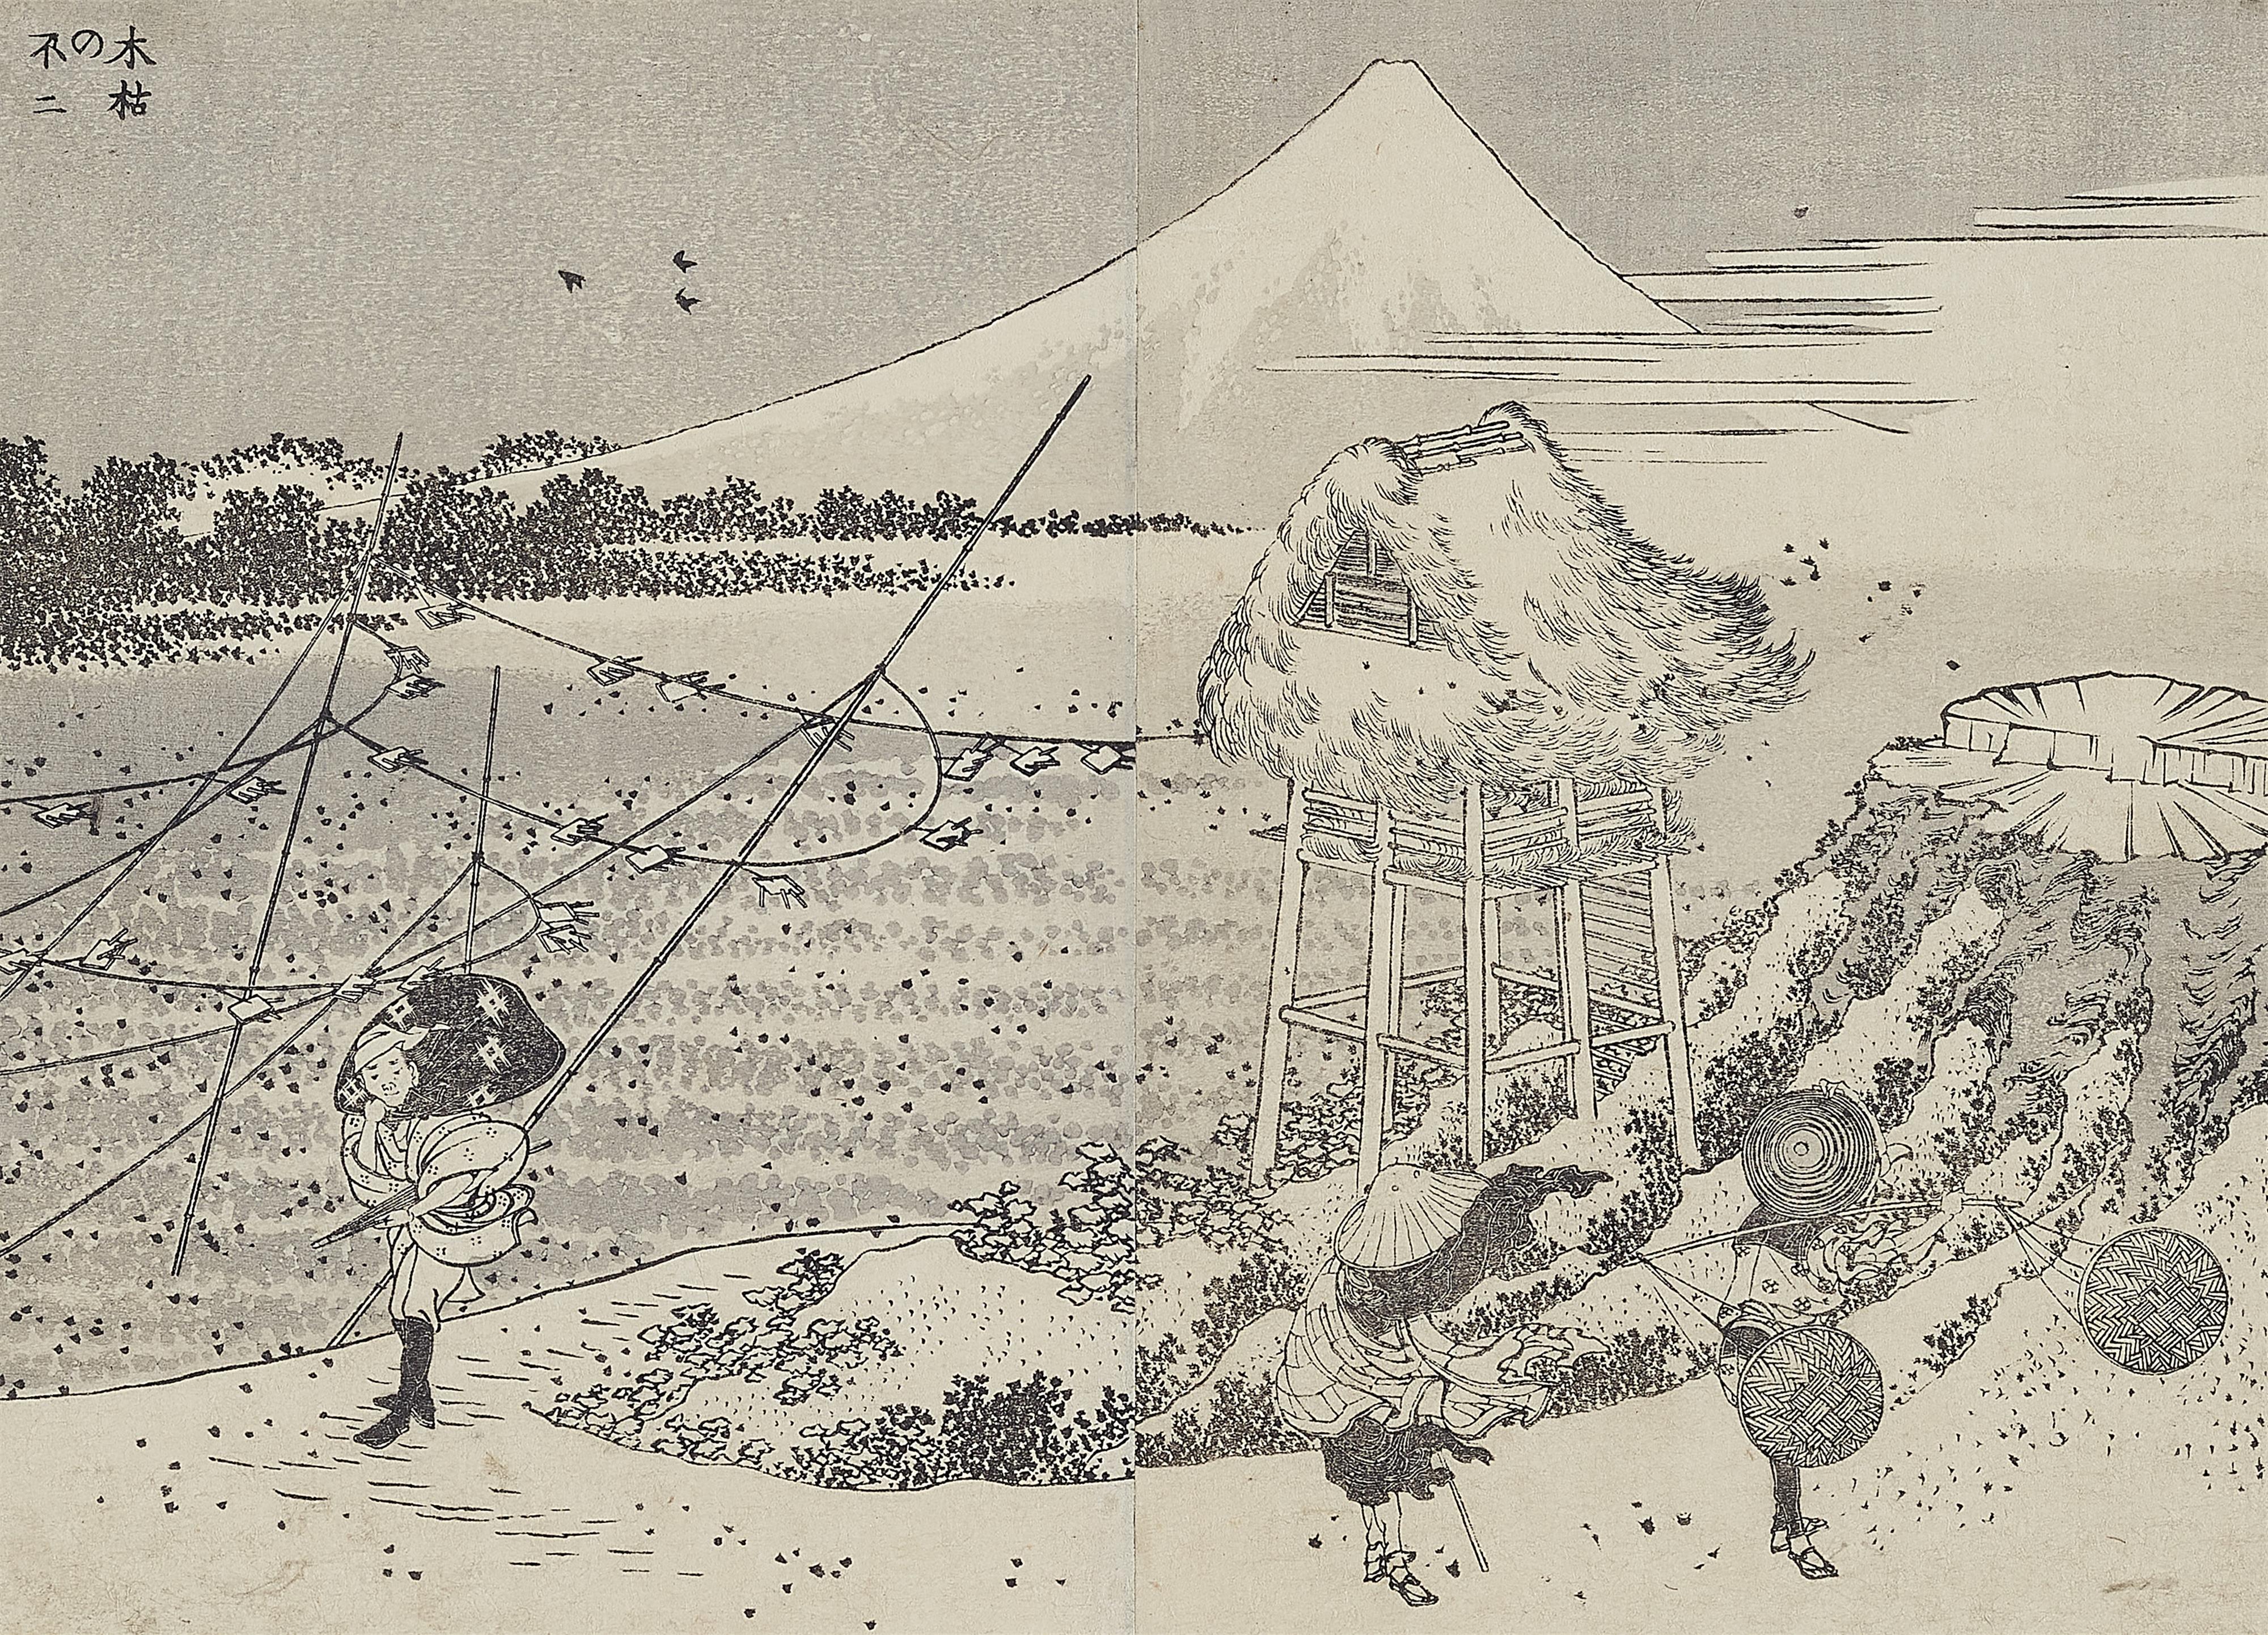 Katsushika Hokusai - Black and white illustrations from the album Fugaku hyakkei - image-23